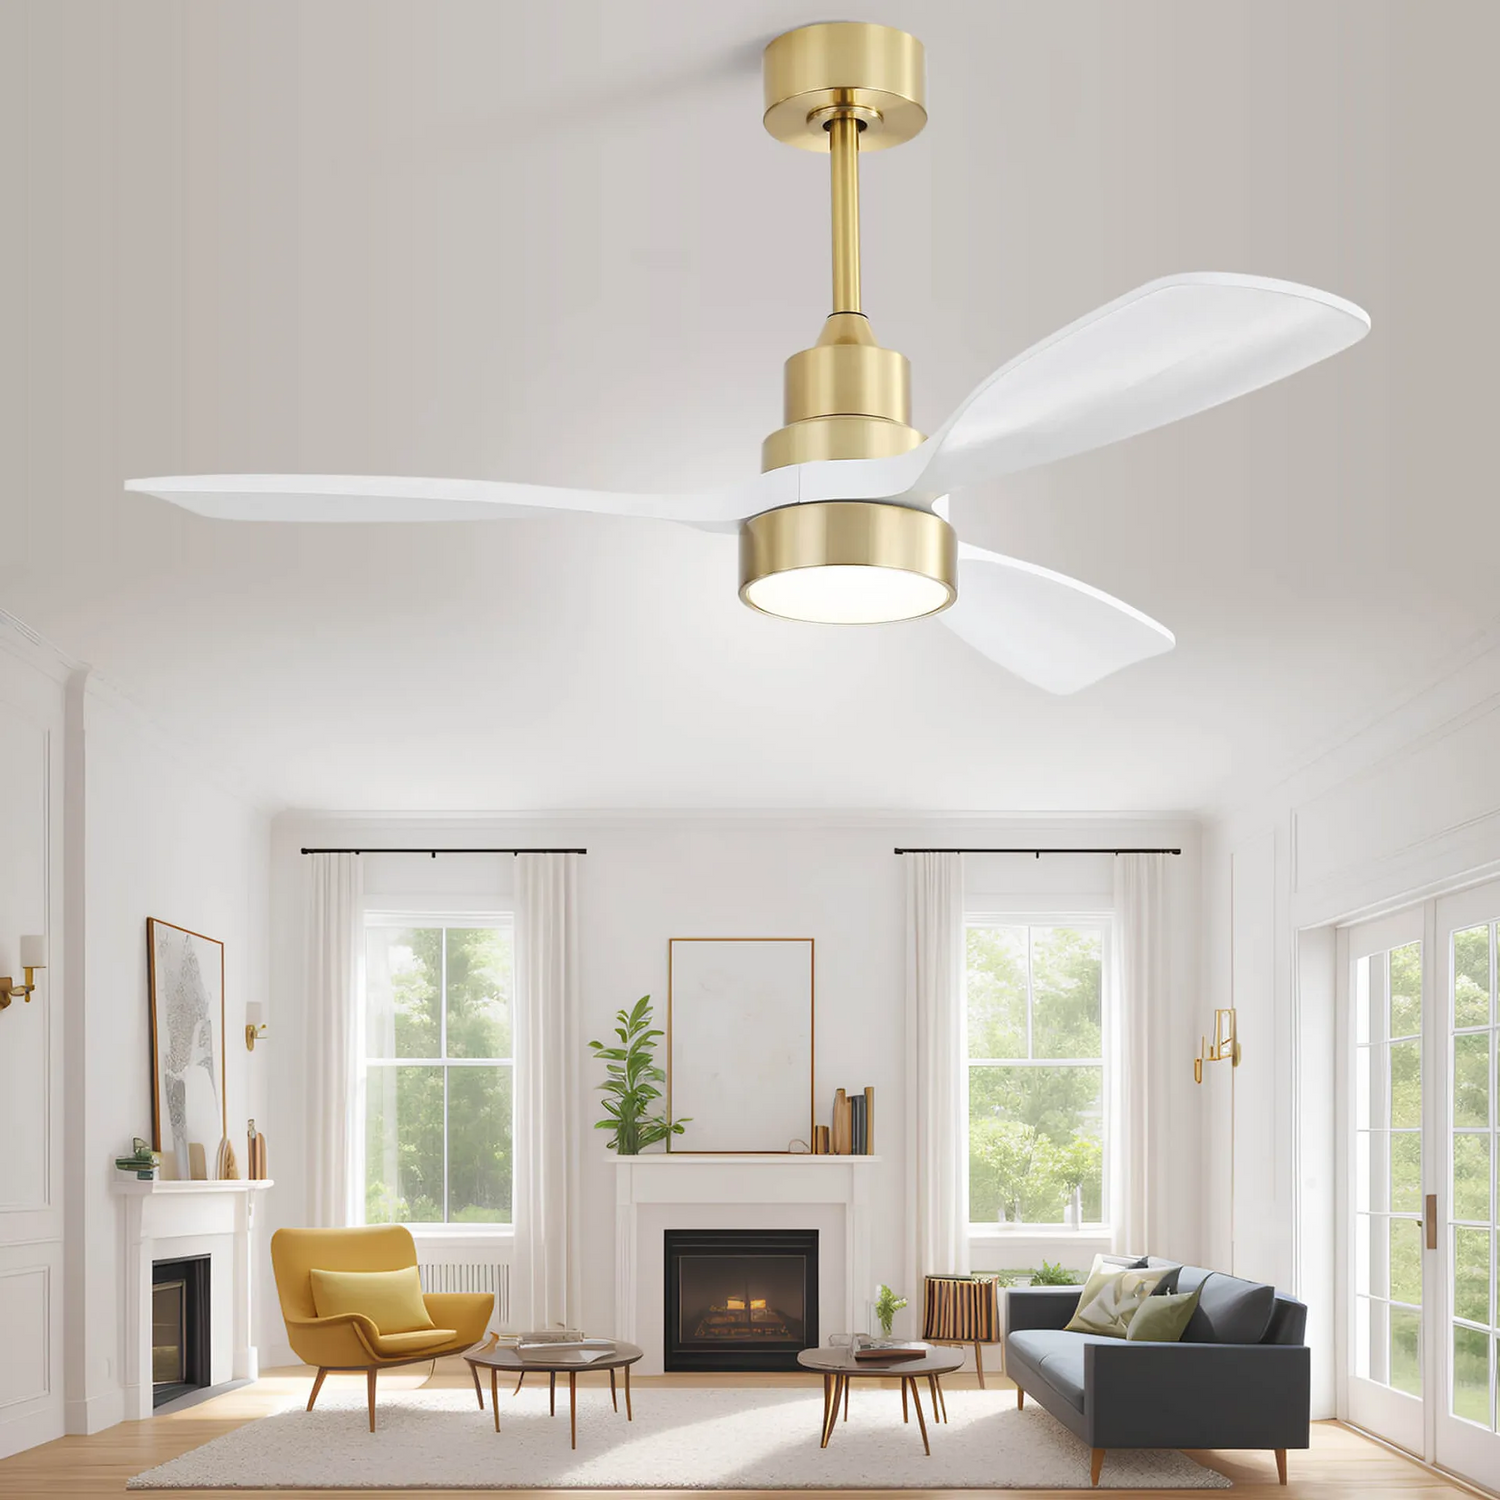 KBS wood three blade ceiling fan in a living room